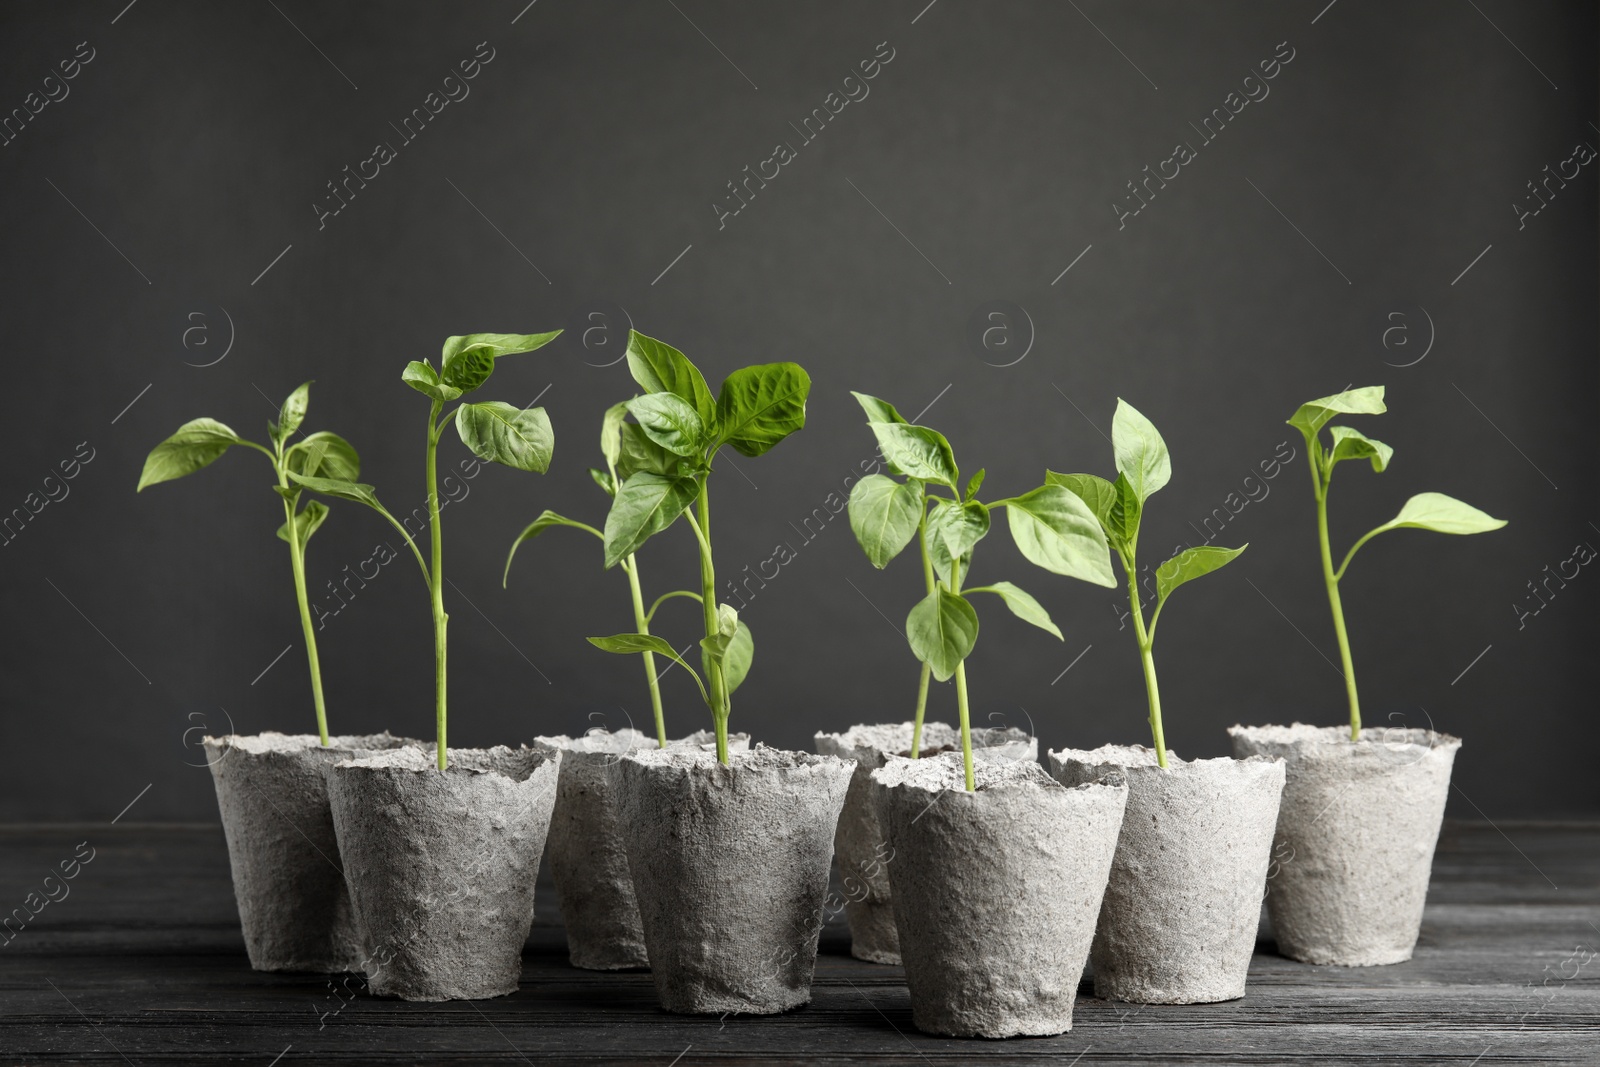 Photo of Vegetable seedlings in peat pots on table against black background